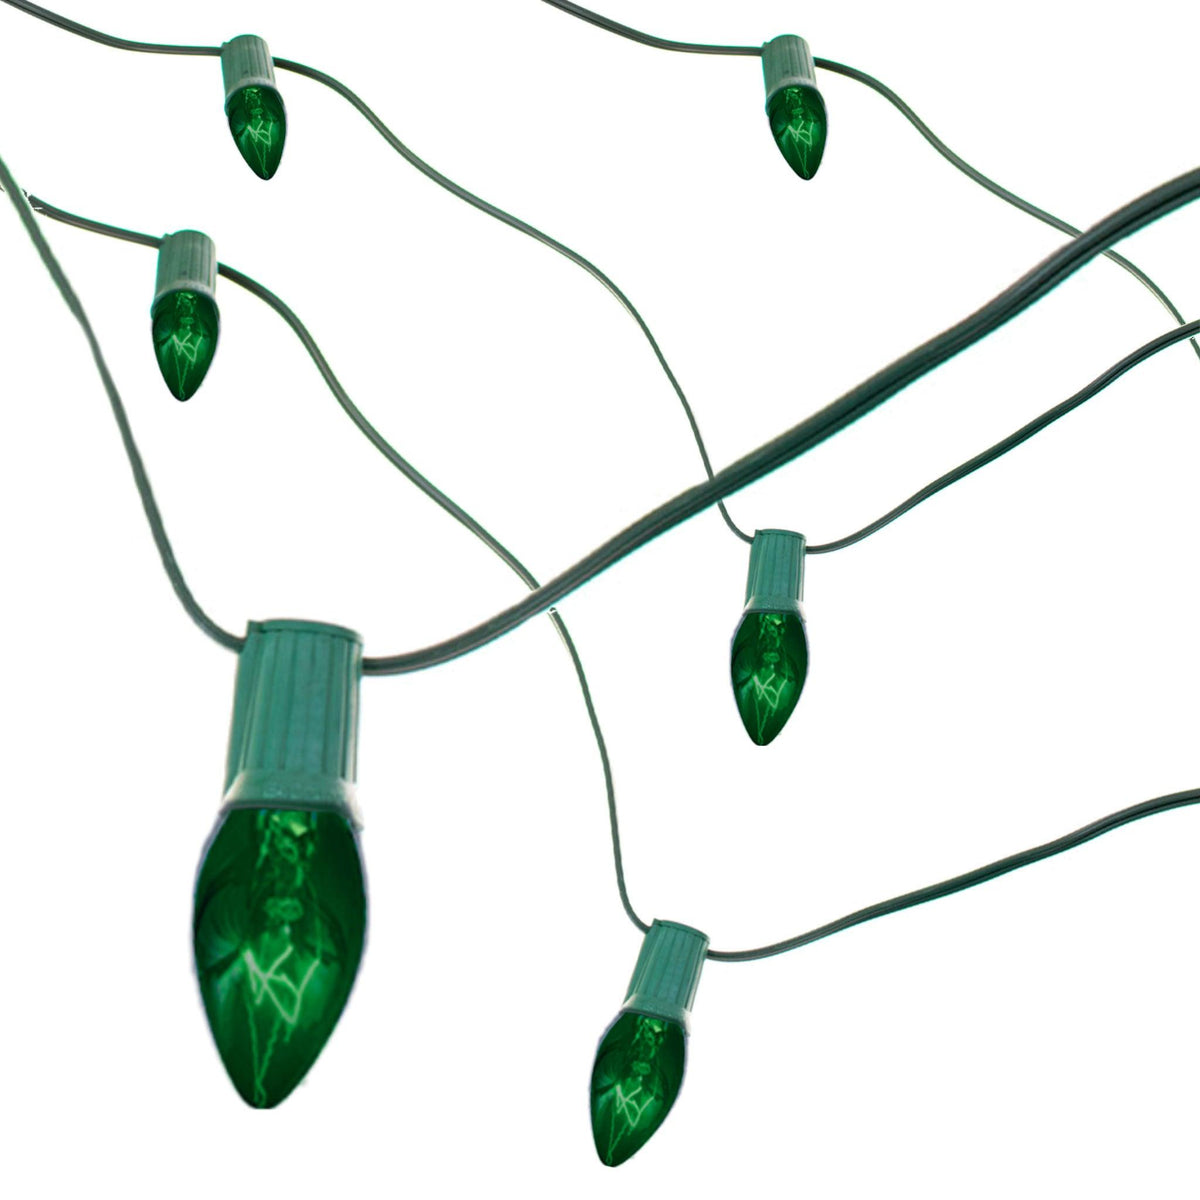 Green Outdoor String Lights - Lee Display